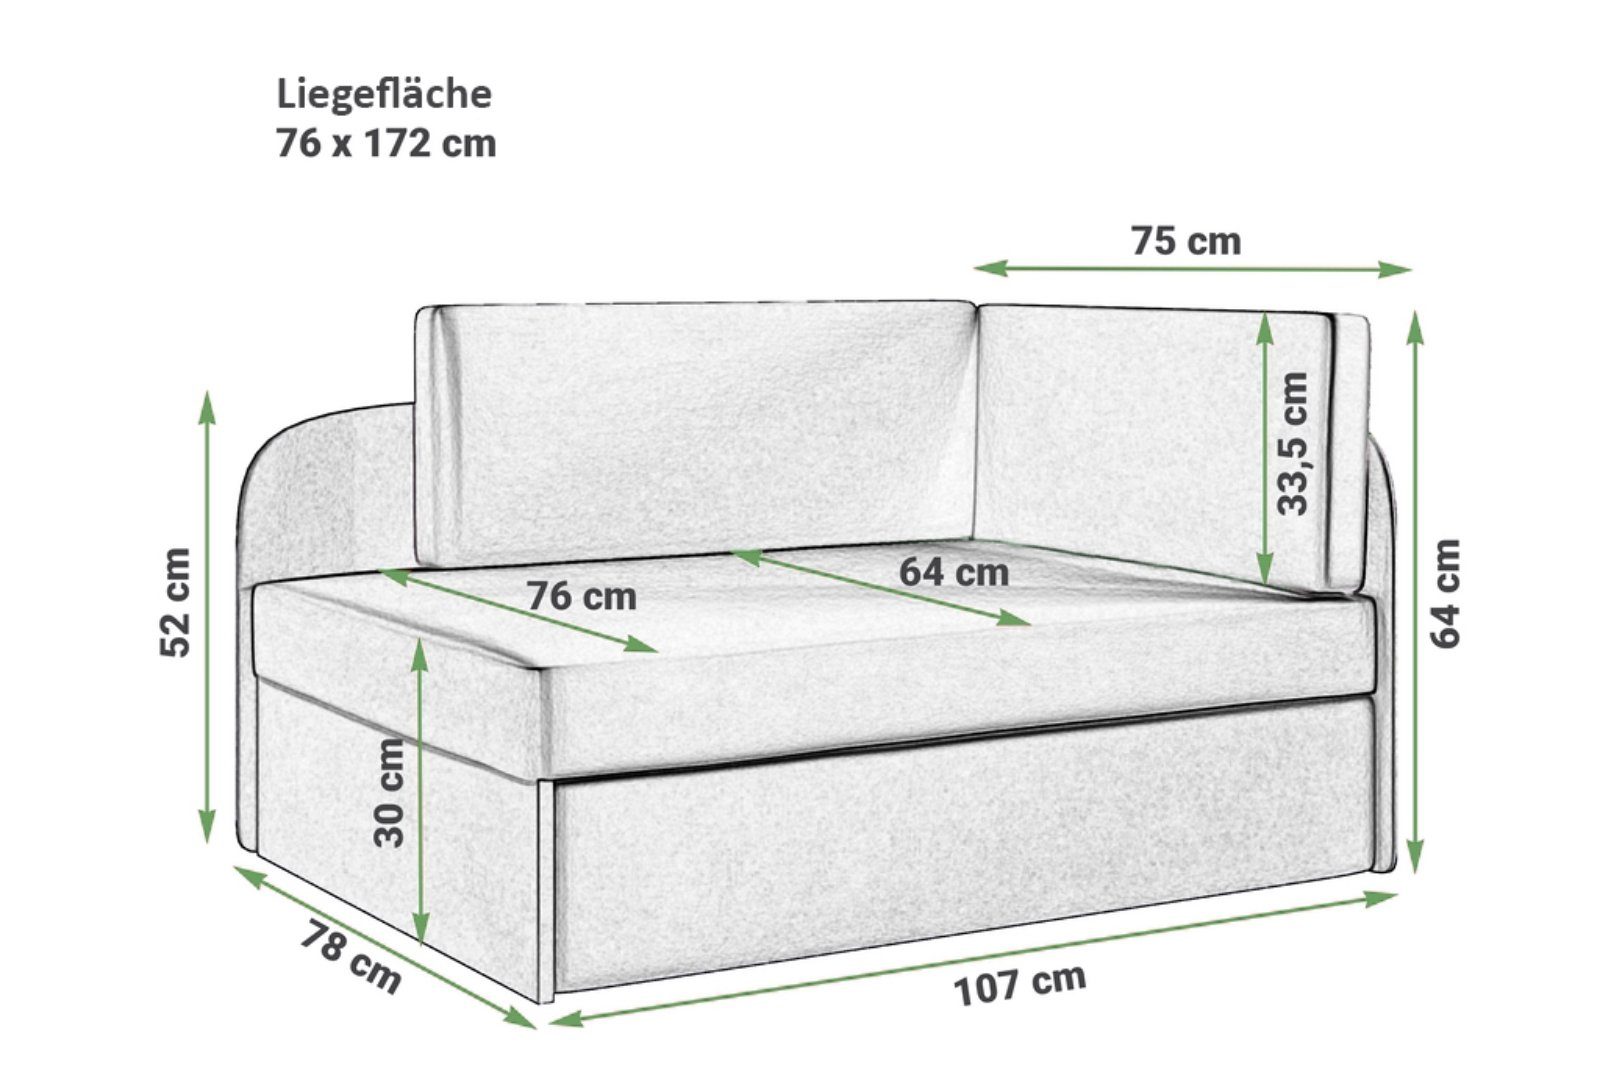 SOFI mit Beautysofa Kinderbett Sofa Ball Schlaffunktion + Kindersofa Schwarz 75cm Kinderbett Bettkasten